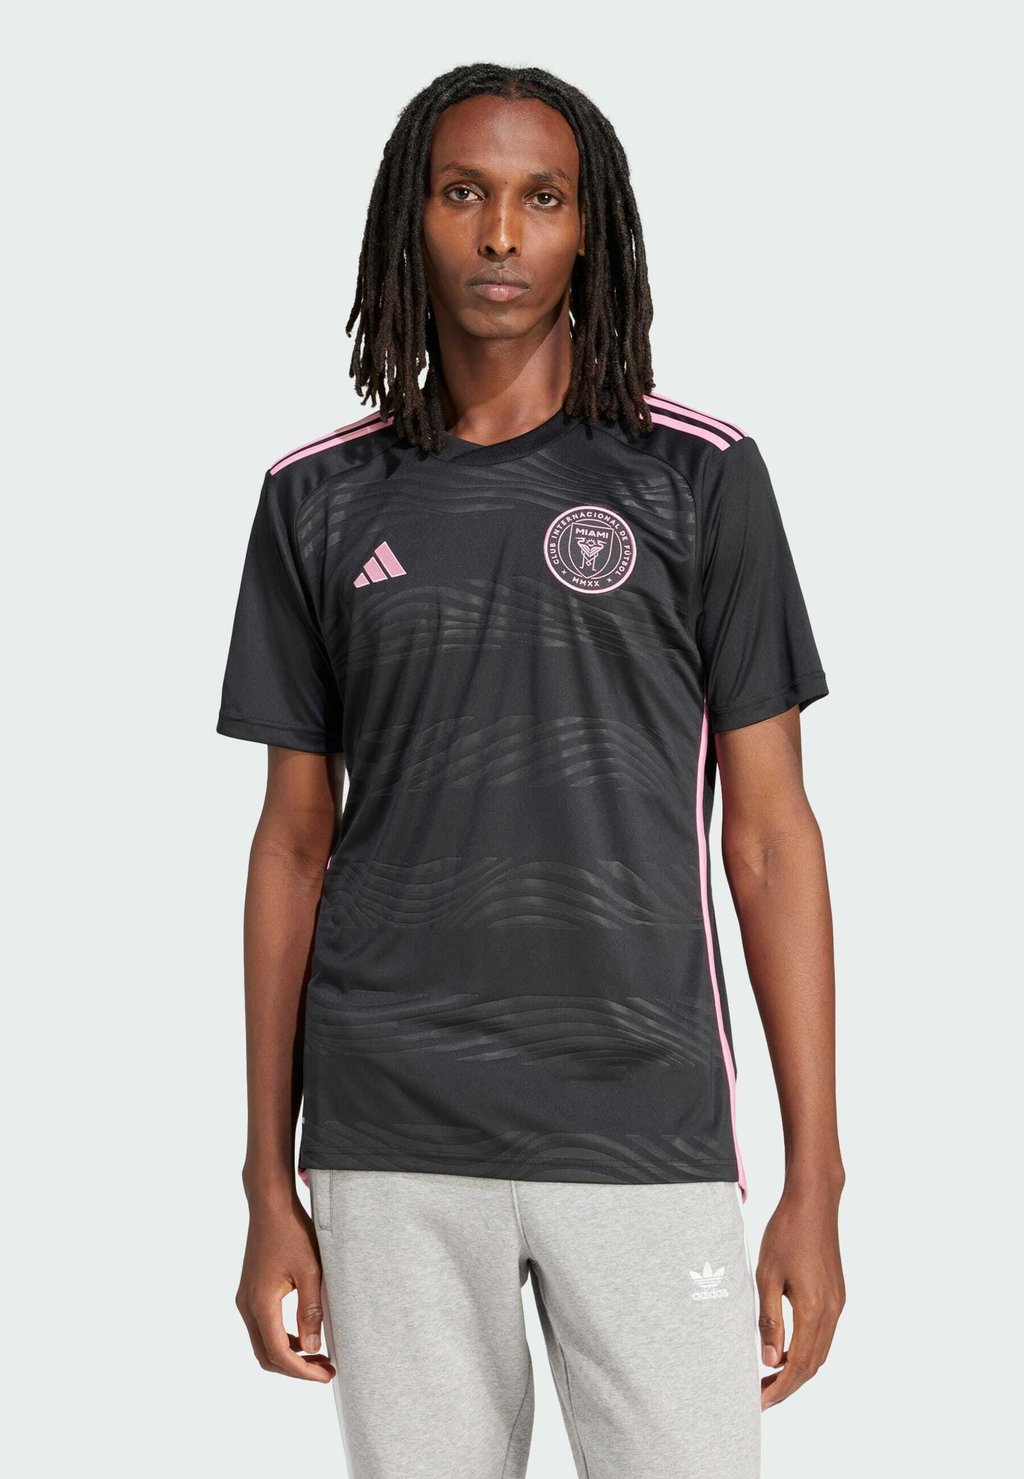 Футболка Inter Miami Adidas, цвет black bliss pink bliss v2 black